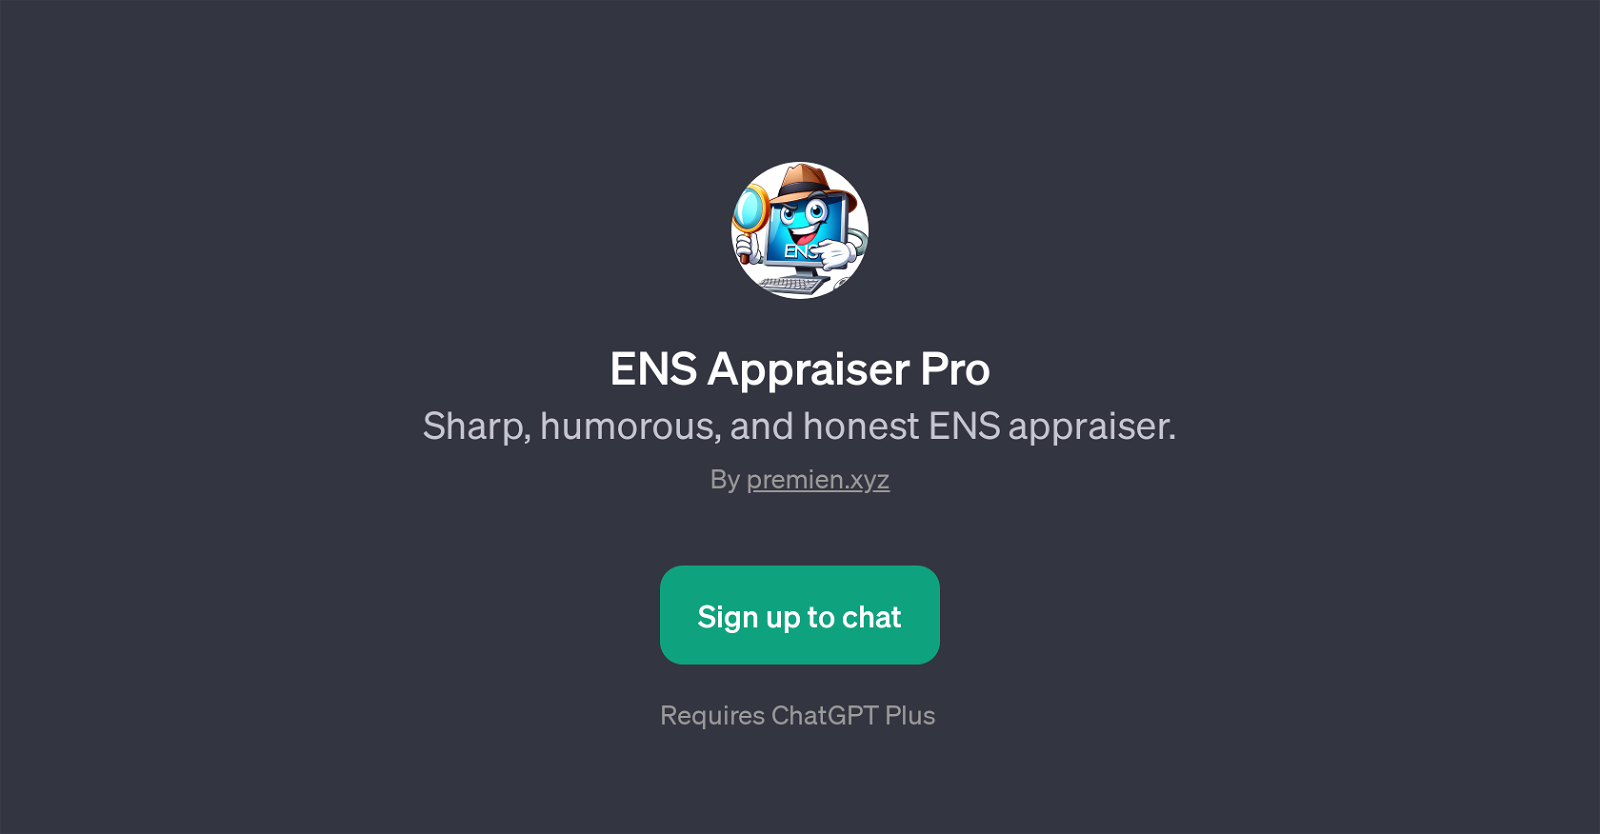 ENS Appraiser Pro website